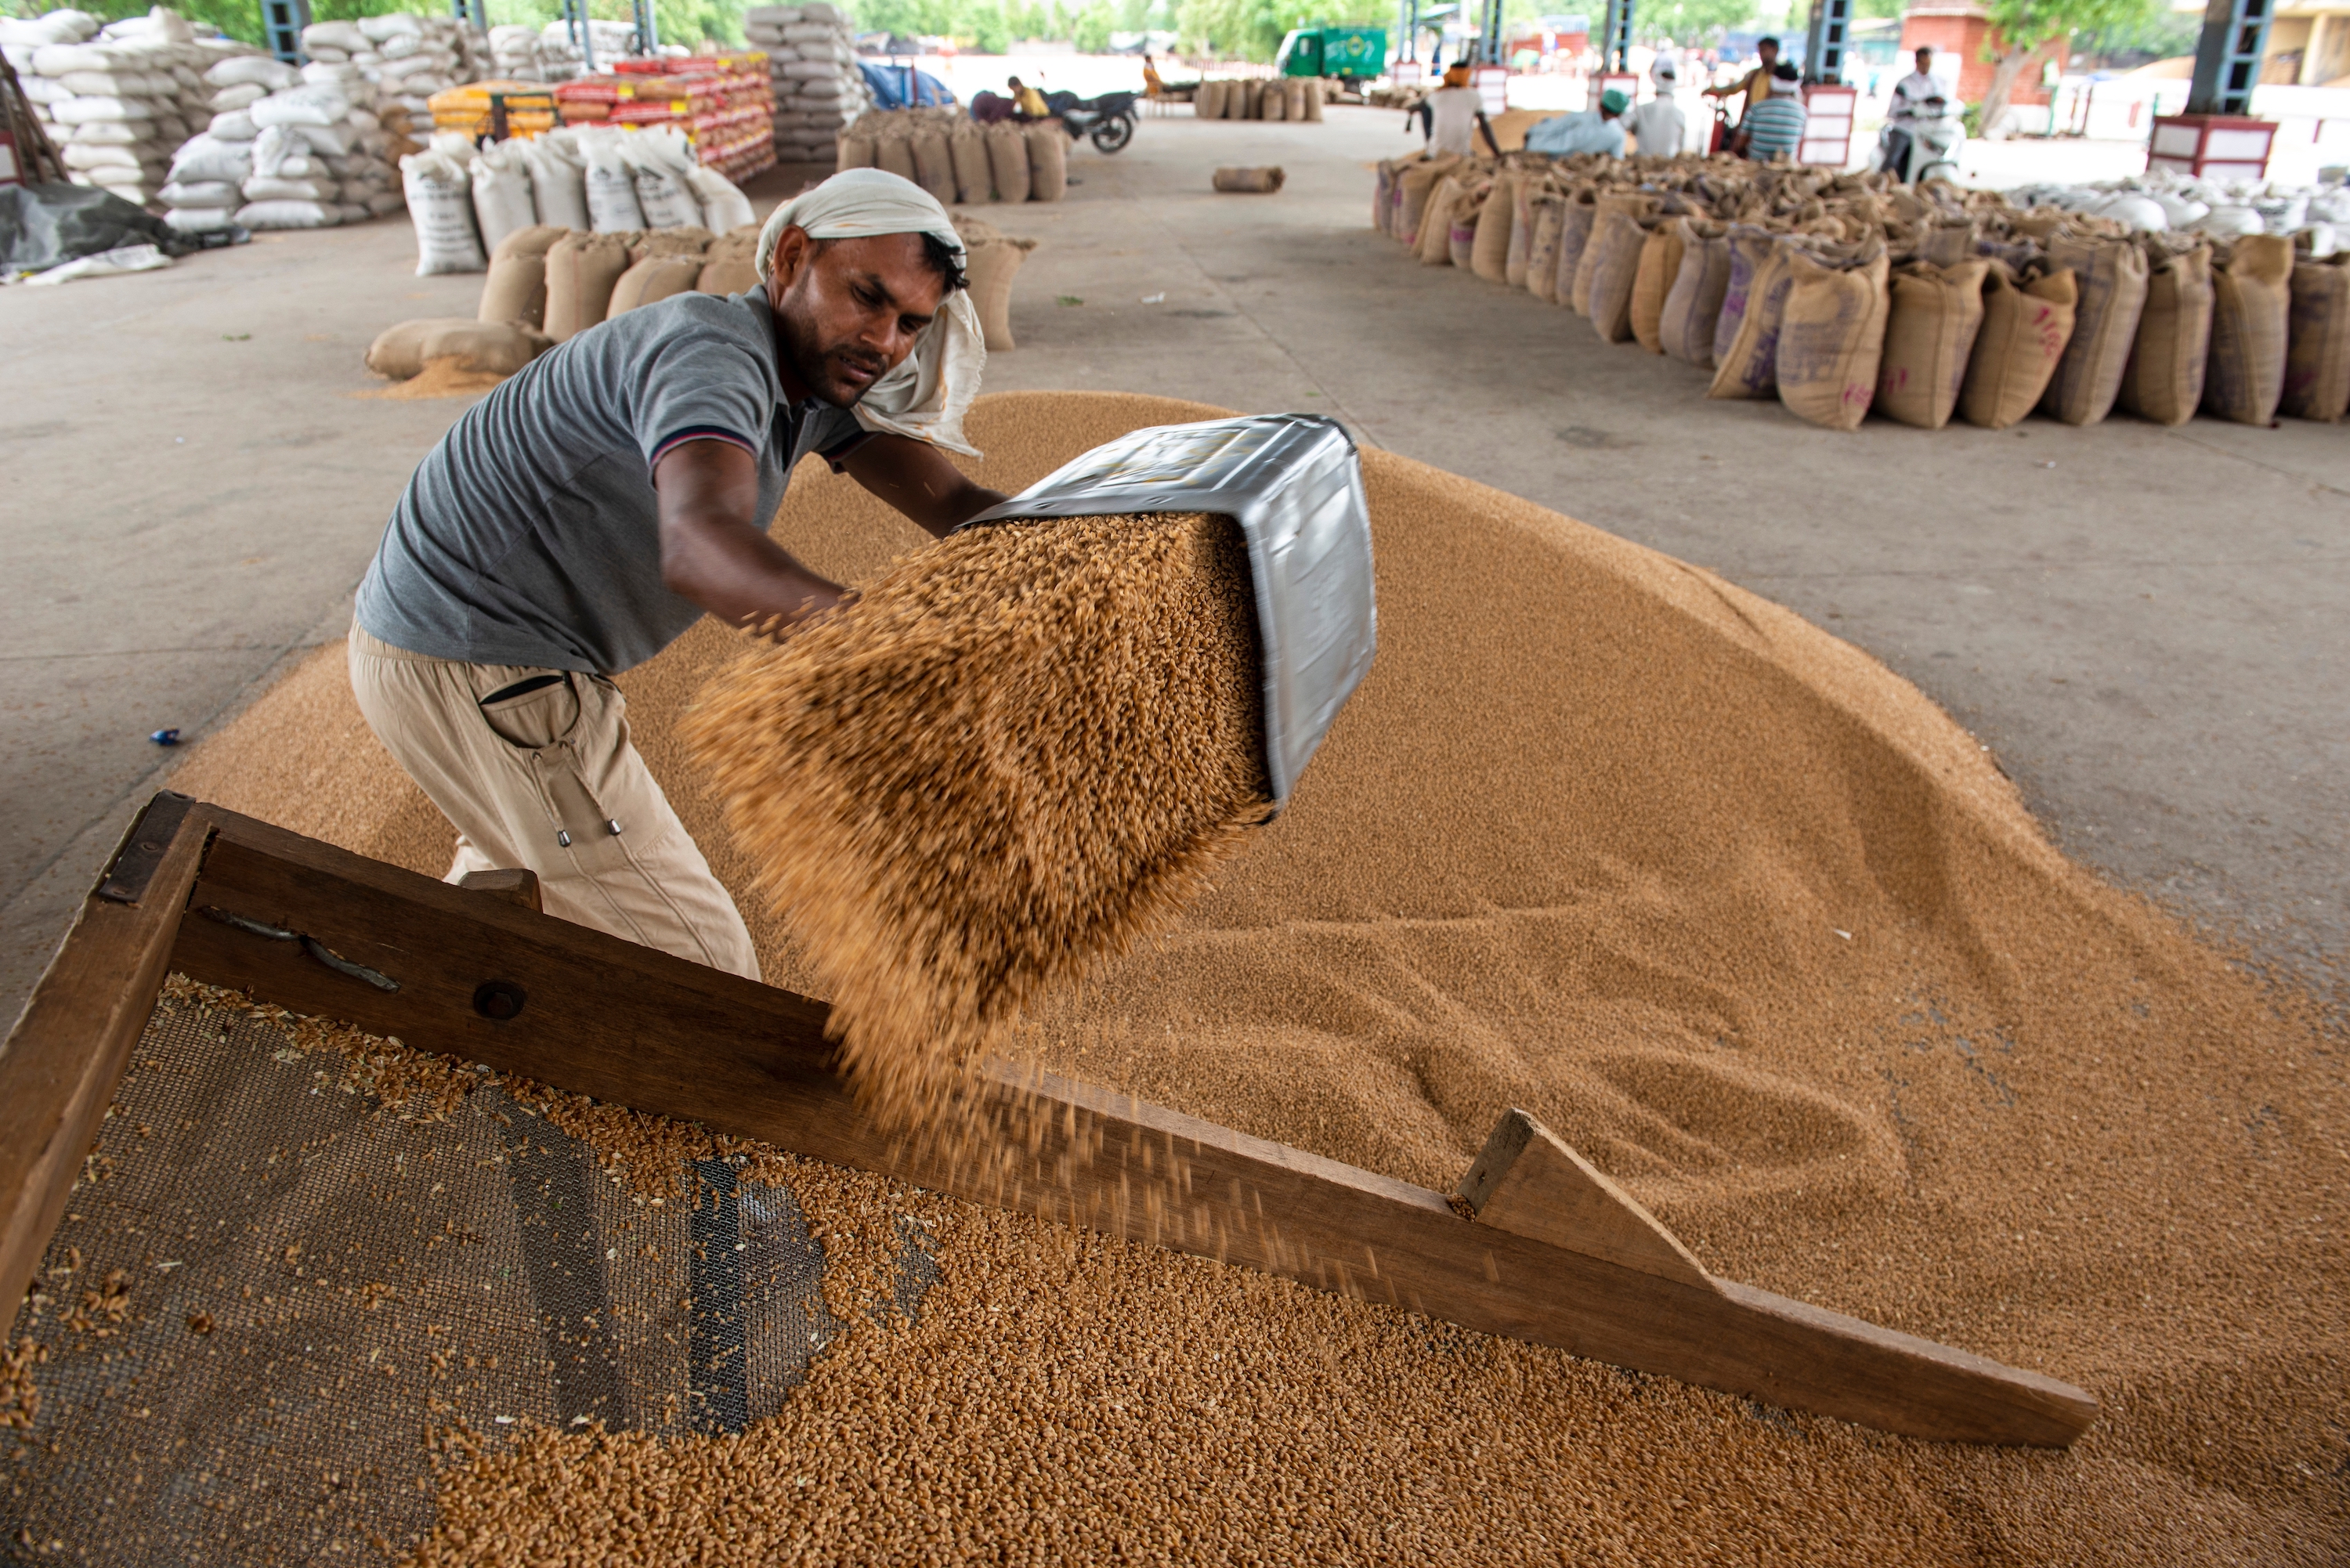 A man in India shoveling grain